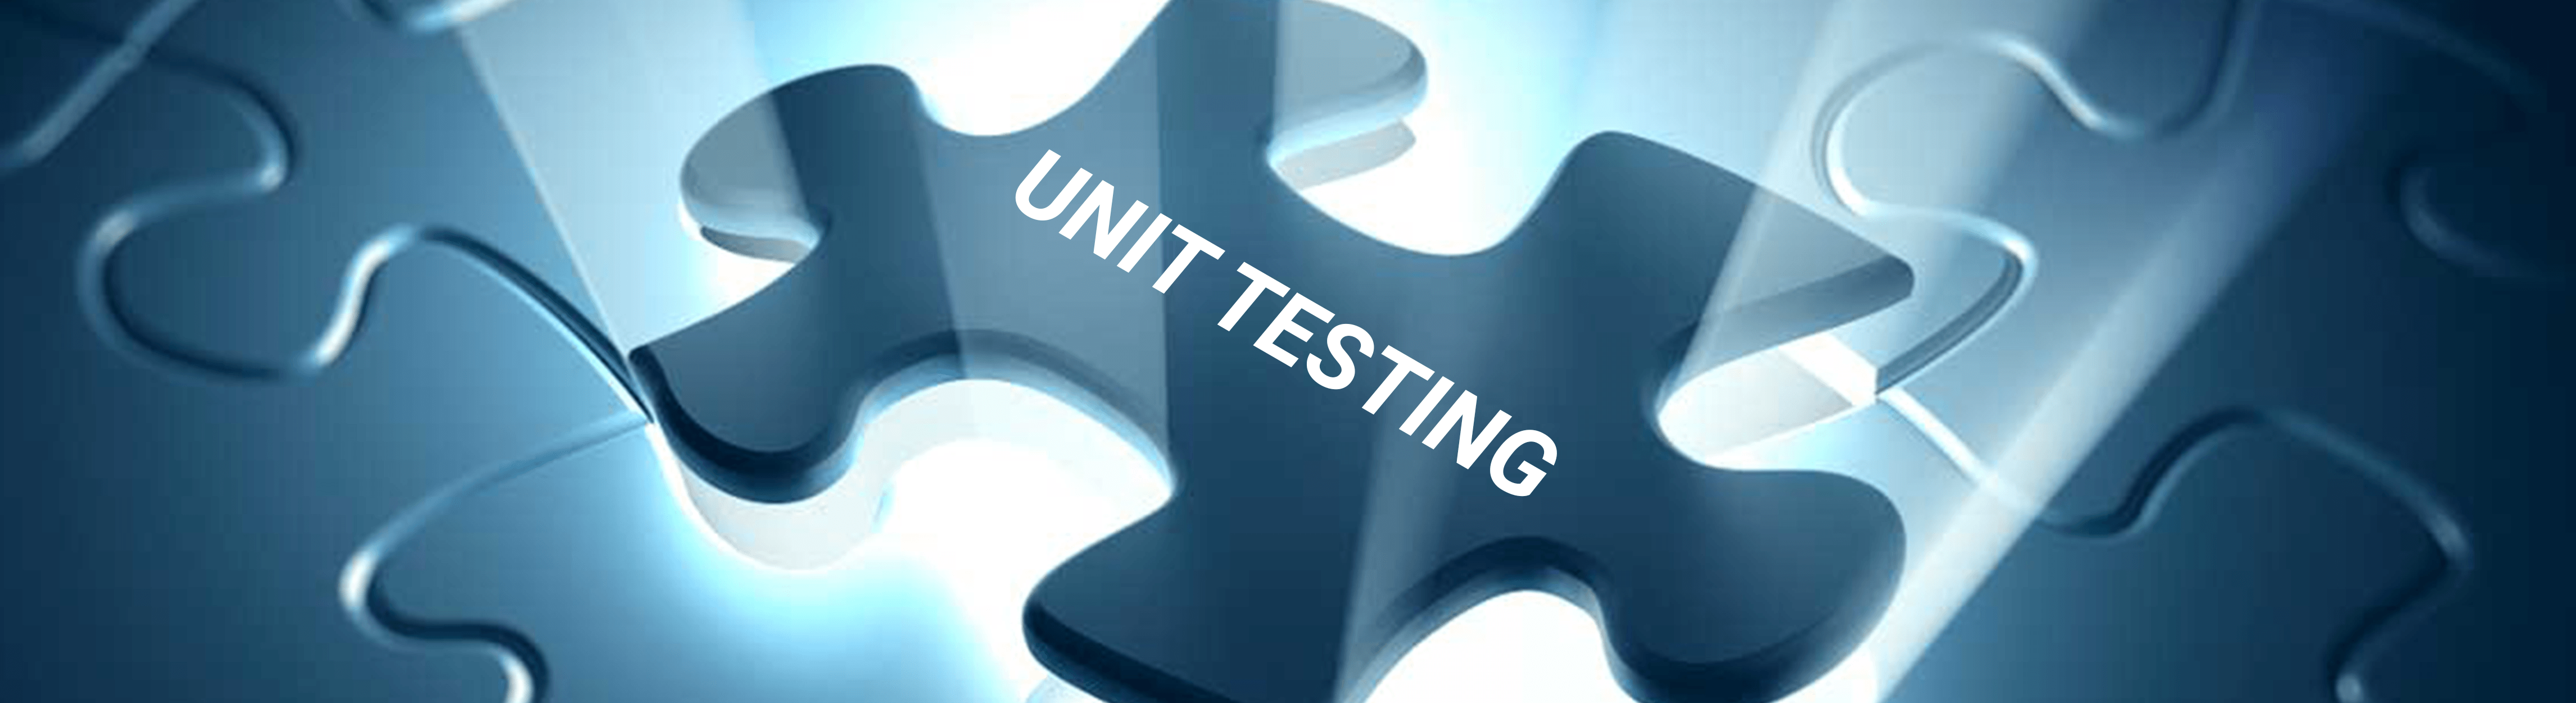 Importance of Unit Testing